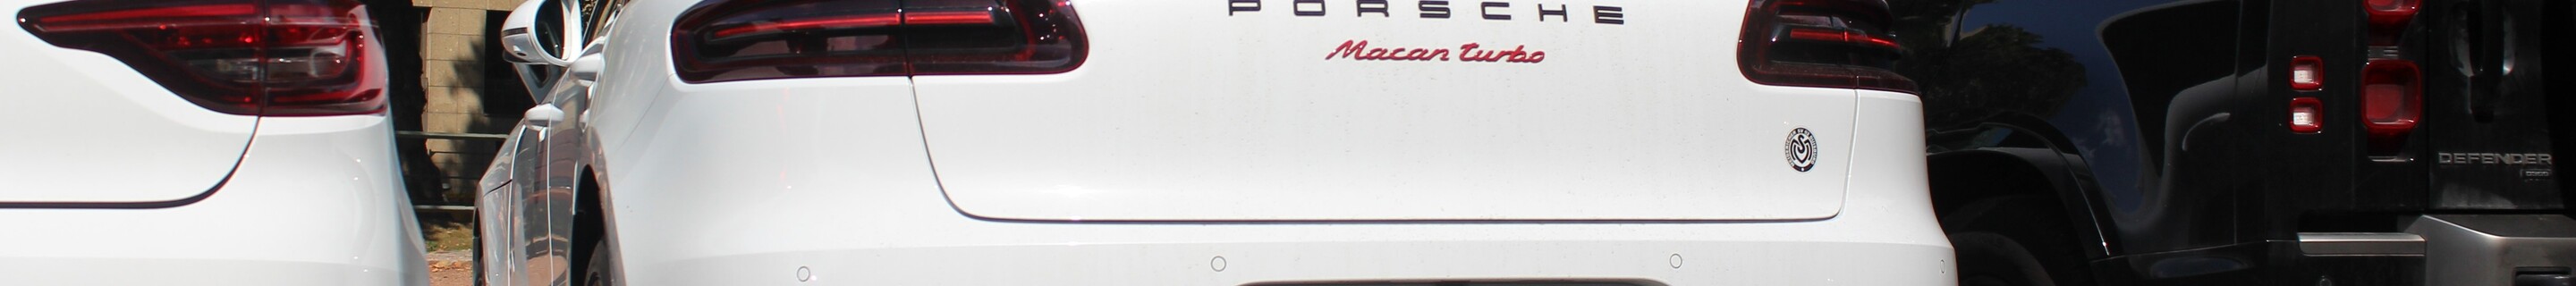 Porsche 95B Macan Turbo Exclusive Performance Edition